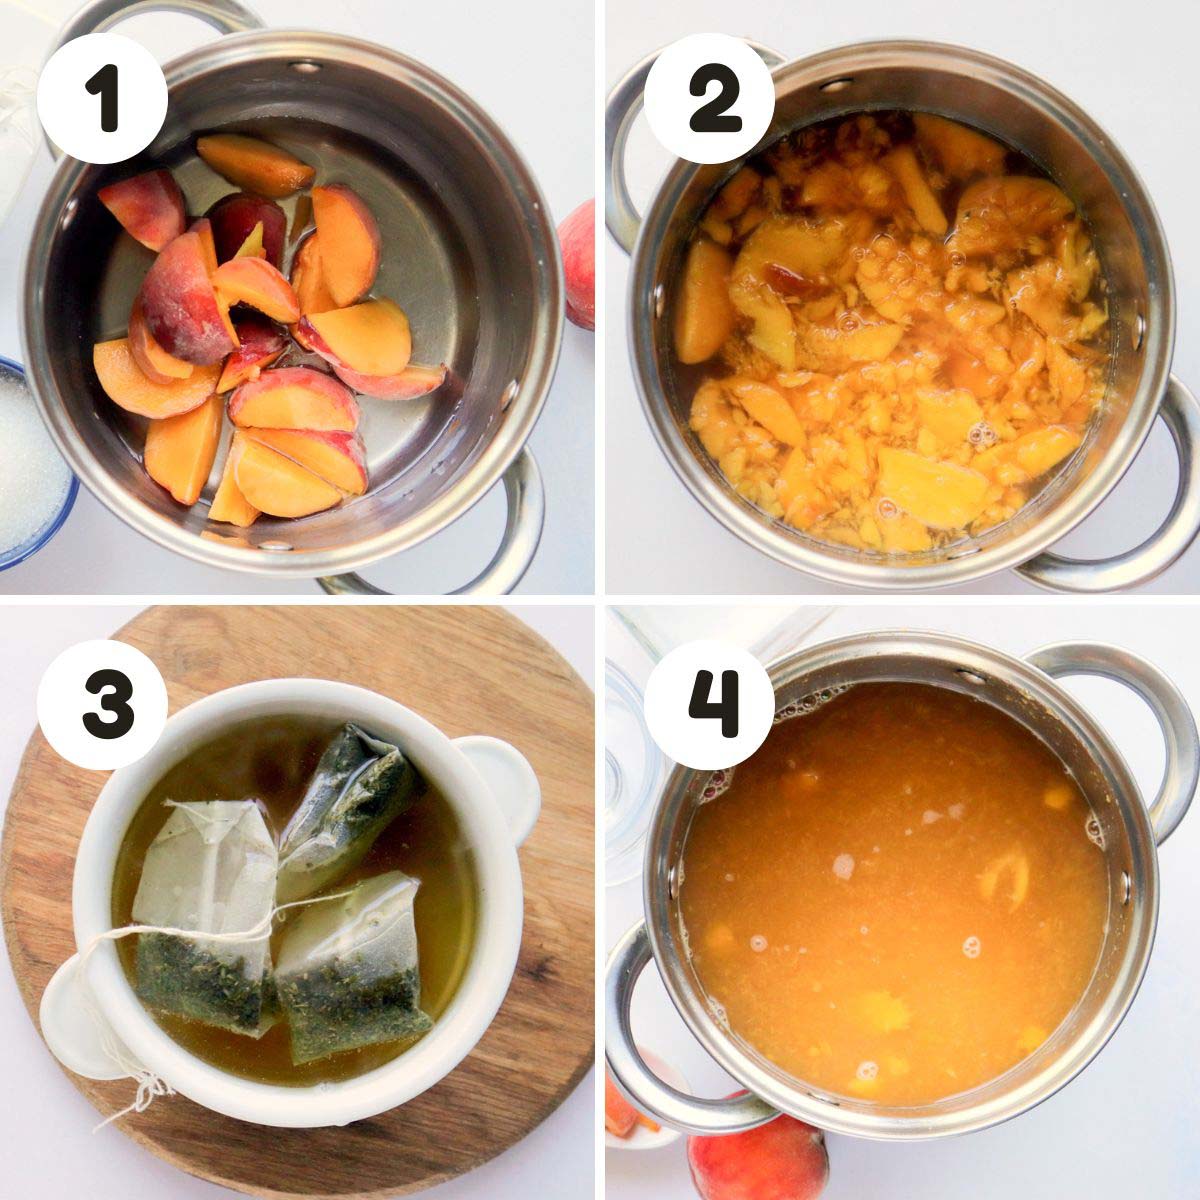 Steps to make the peach tea.